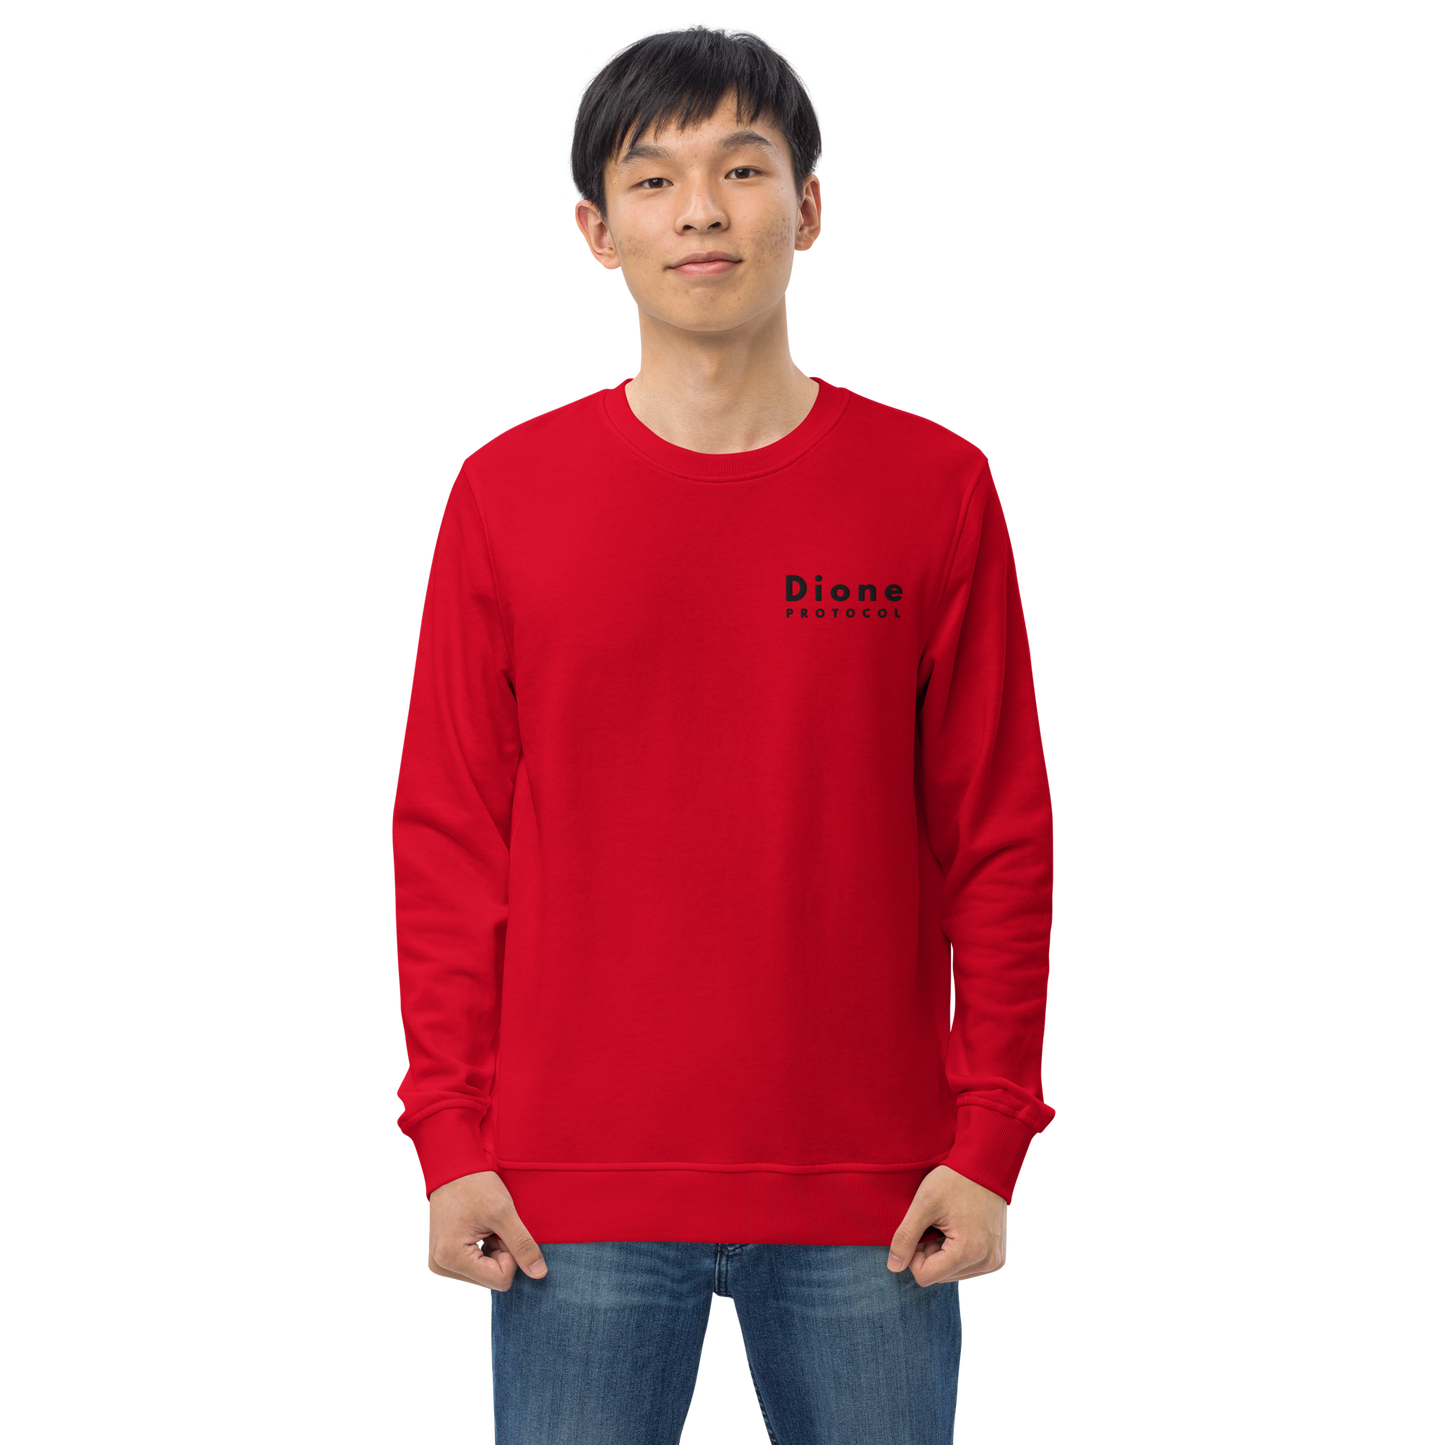 Sweatshirt - Space V1.1 - Red - Standard